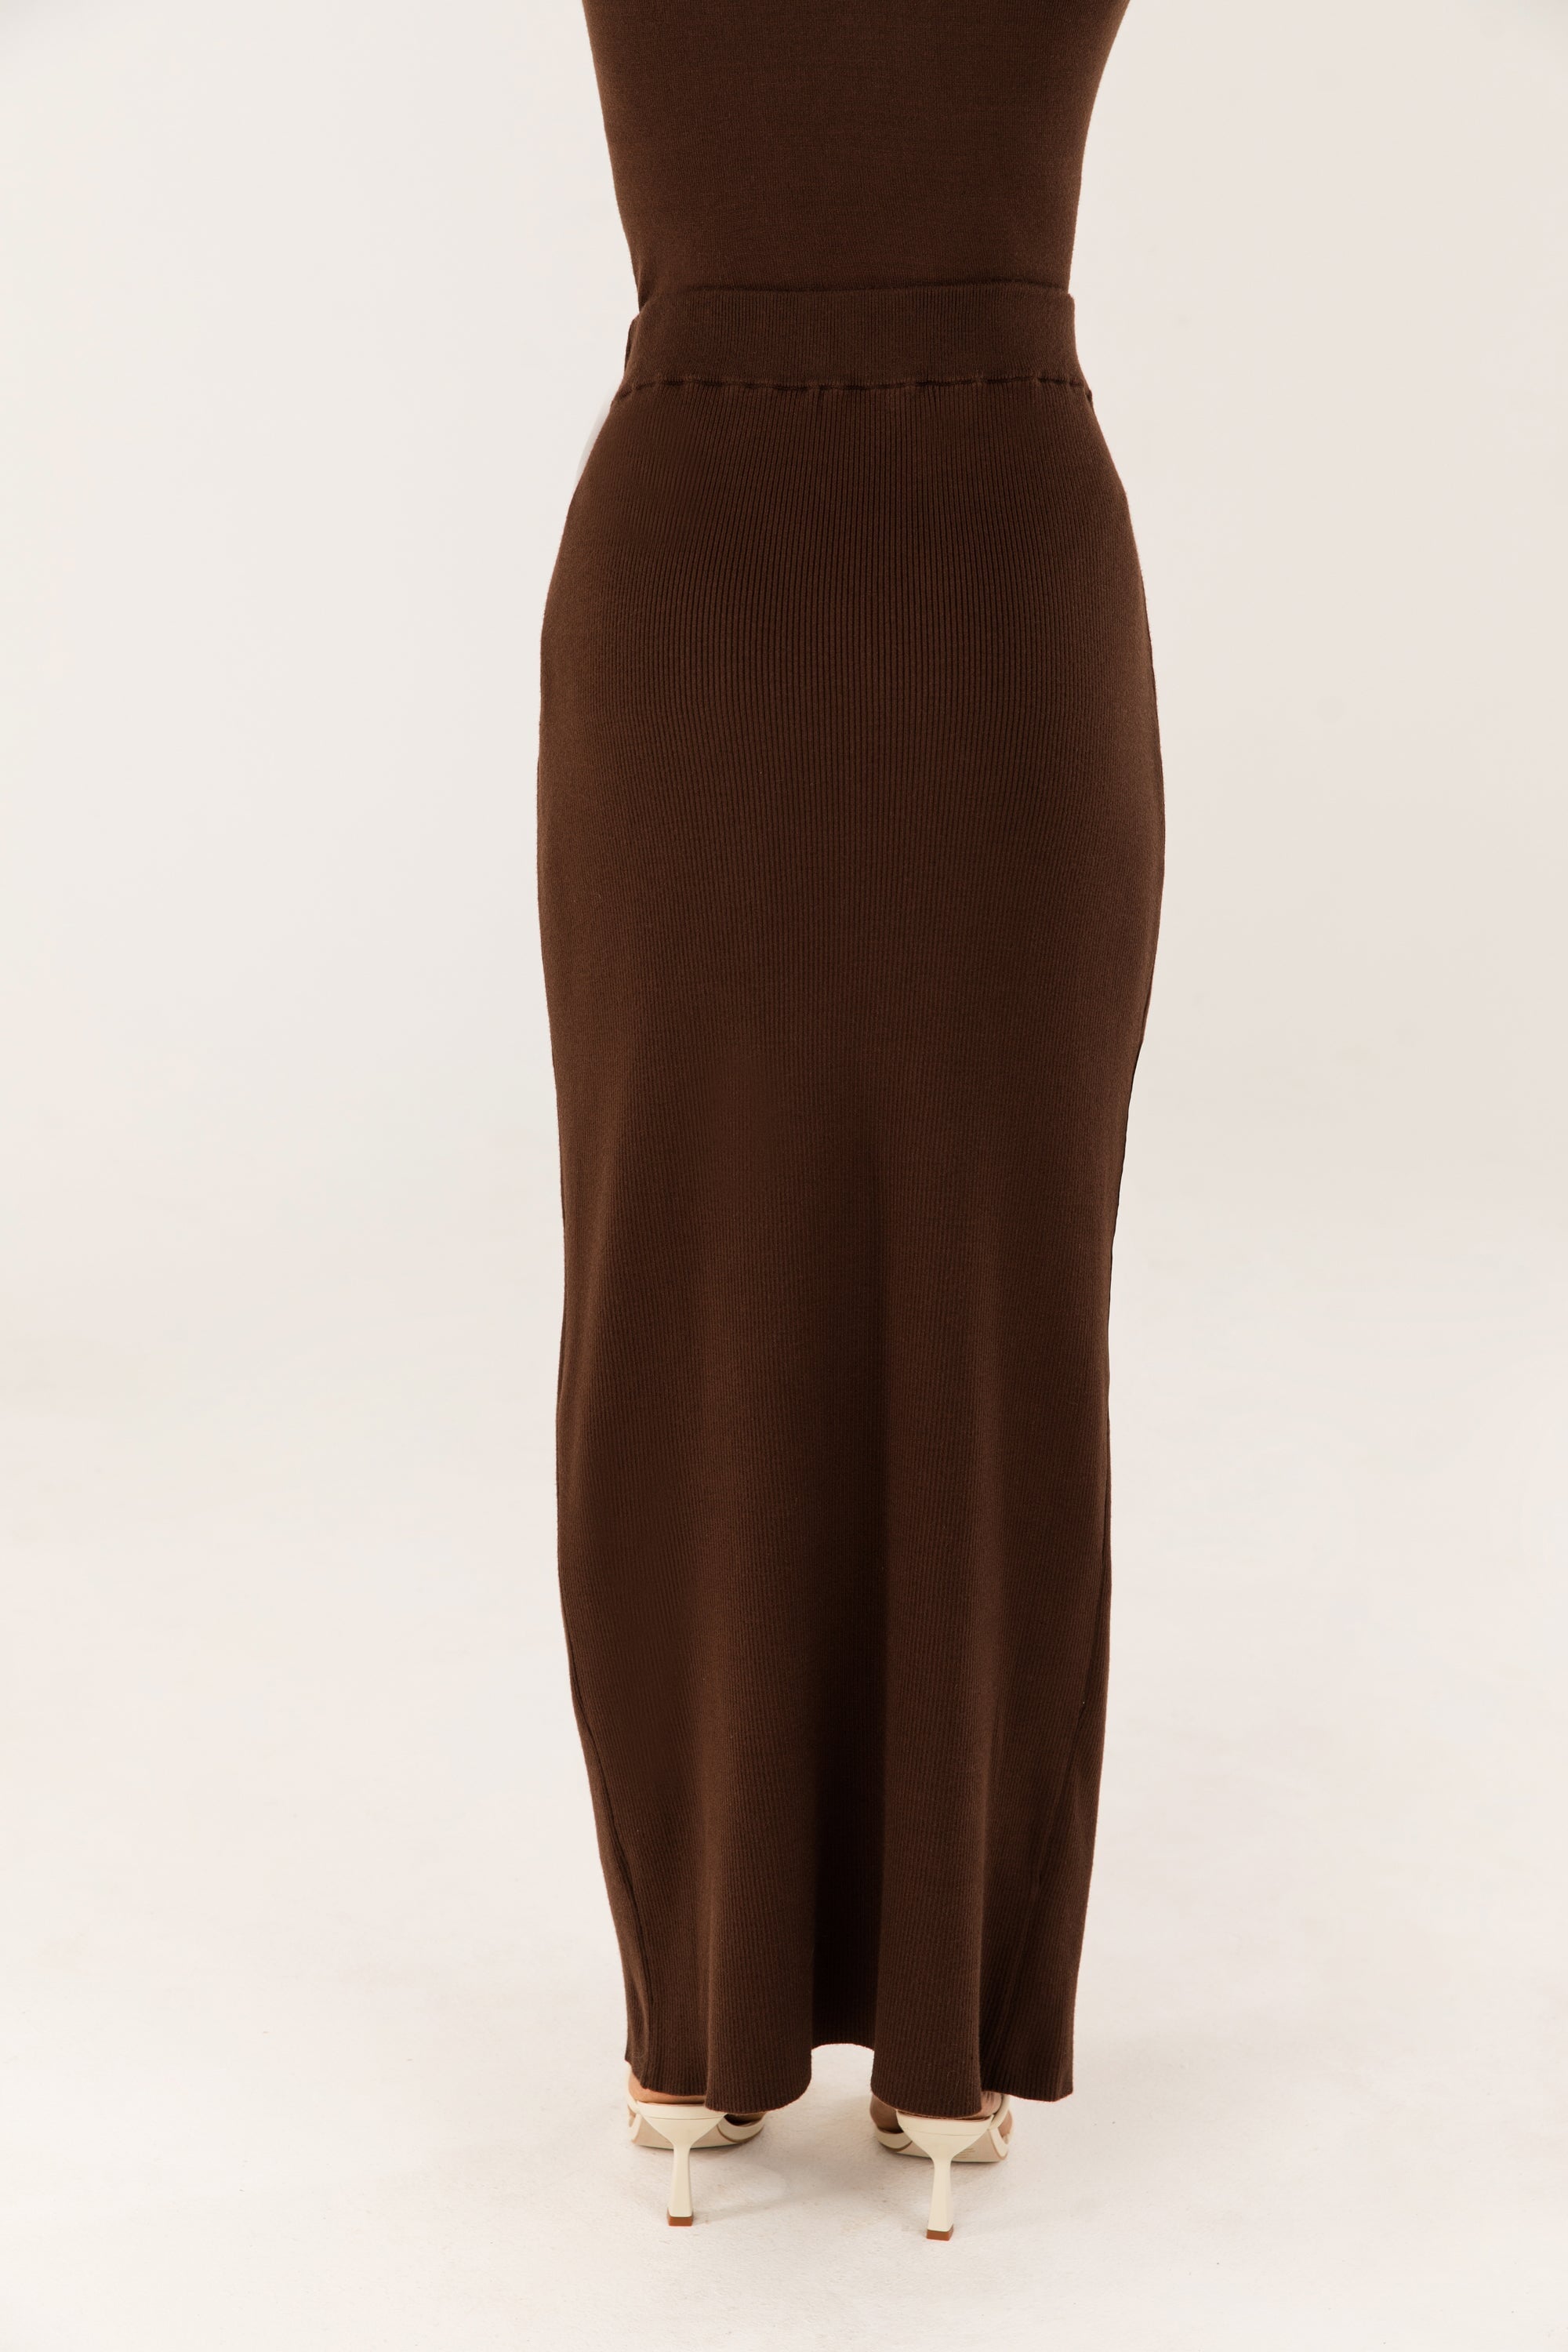 Alara Faux Wrap Knit Maxi Skirt - Chocolate Brown Veiled 